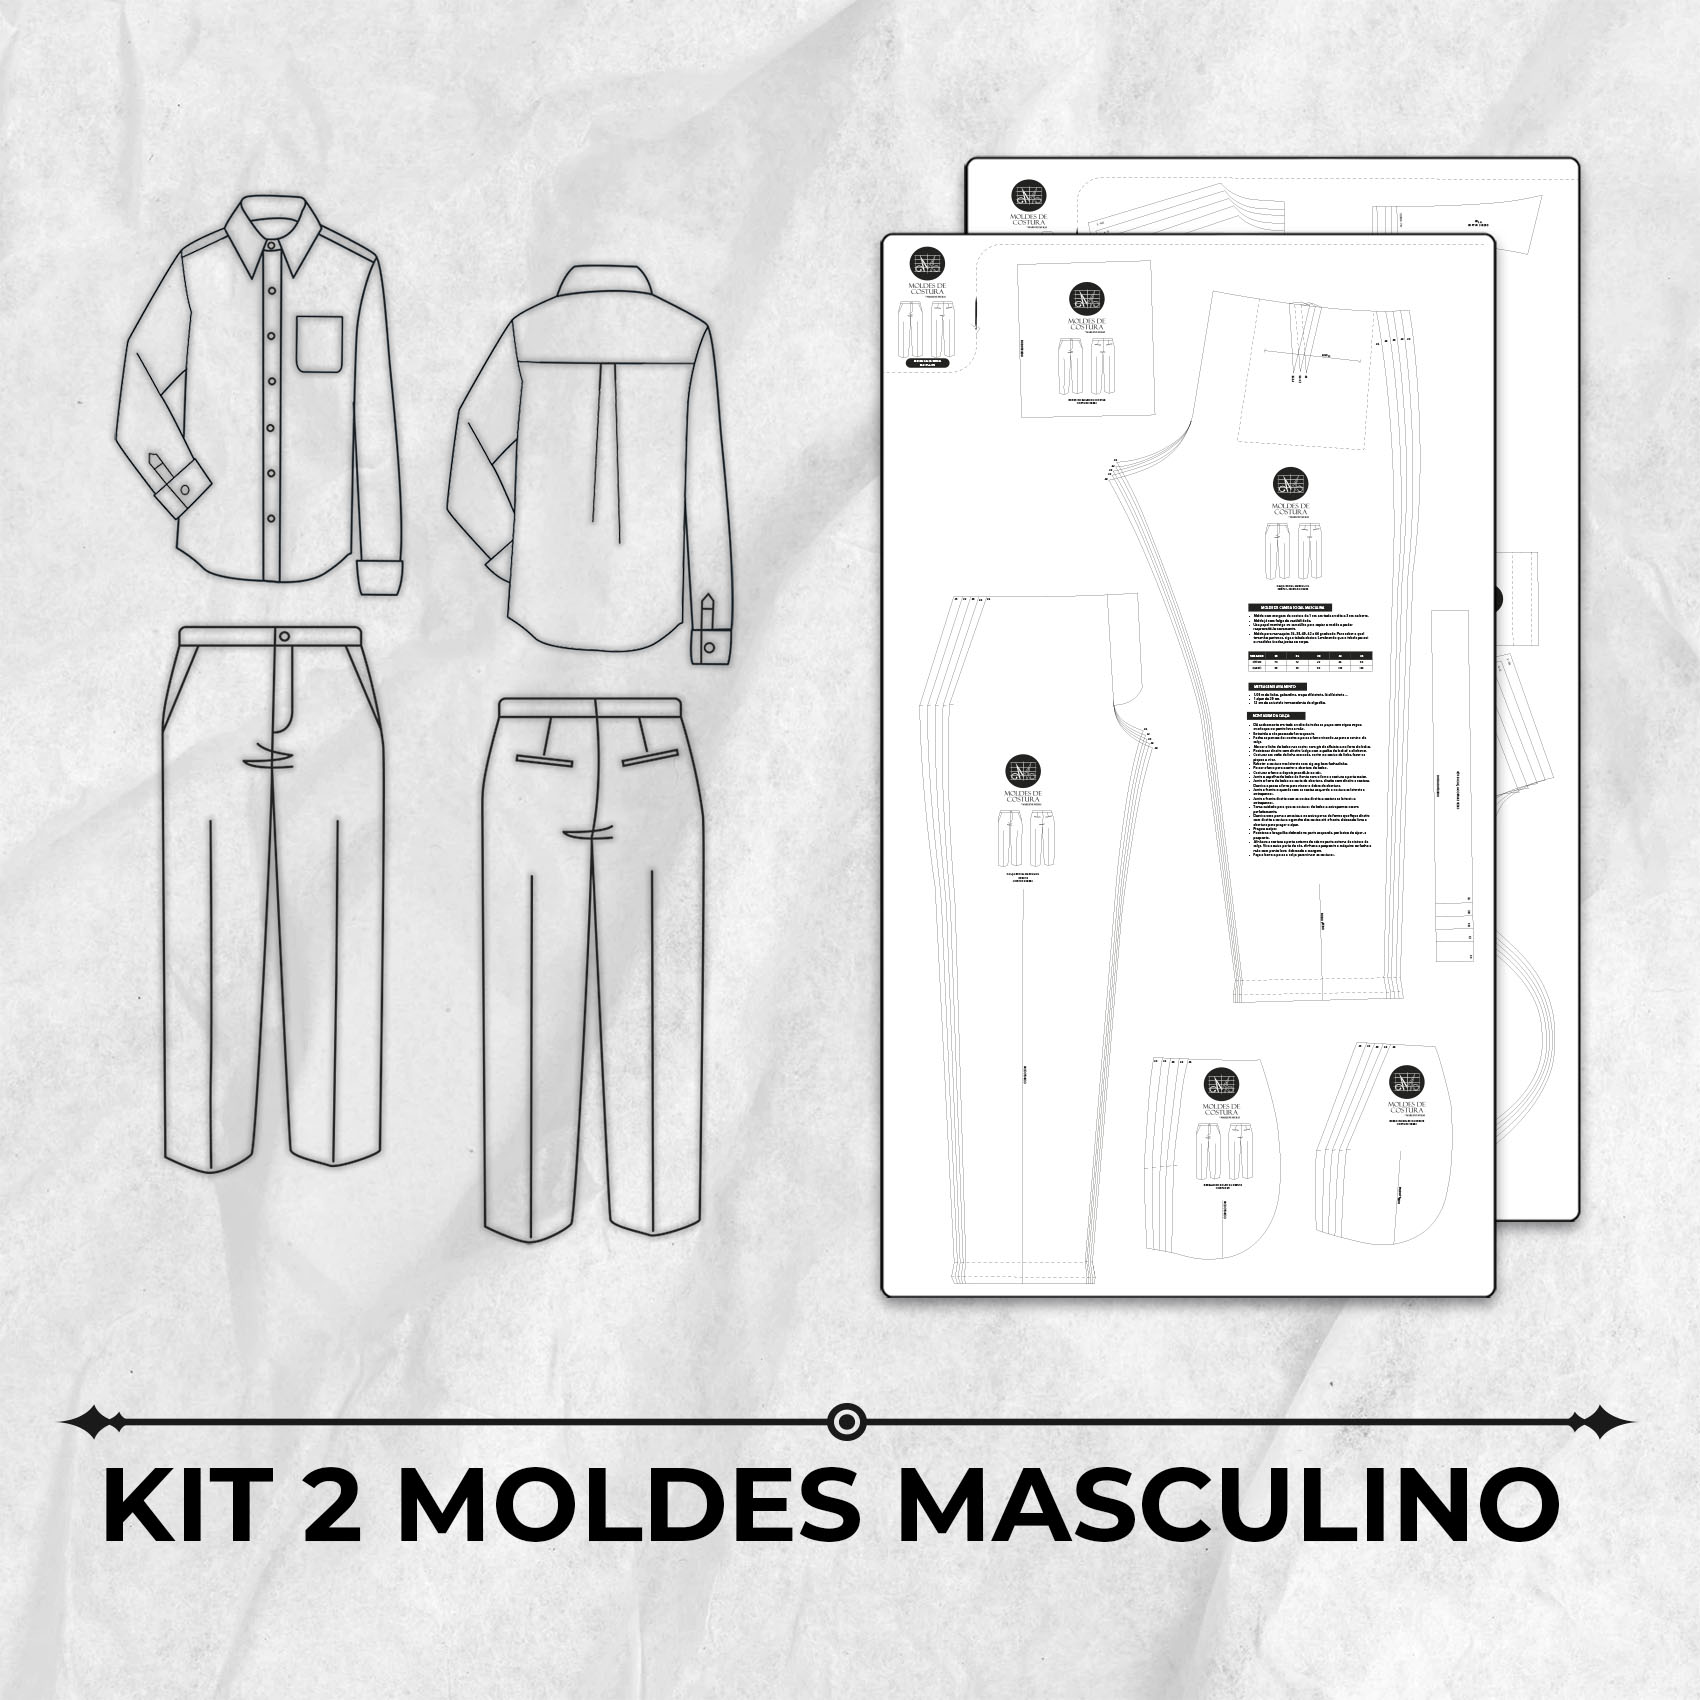 Kit 2 moldes masculino by Marlene Mukai